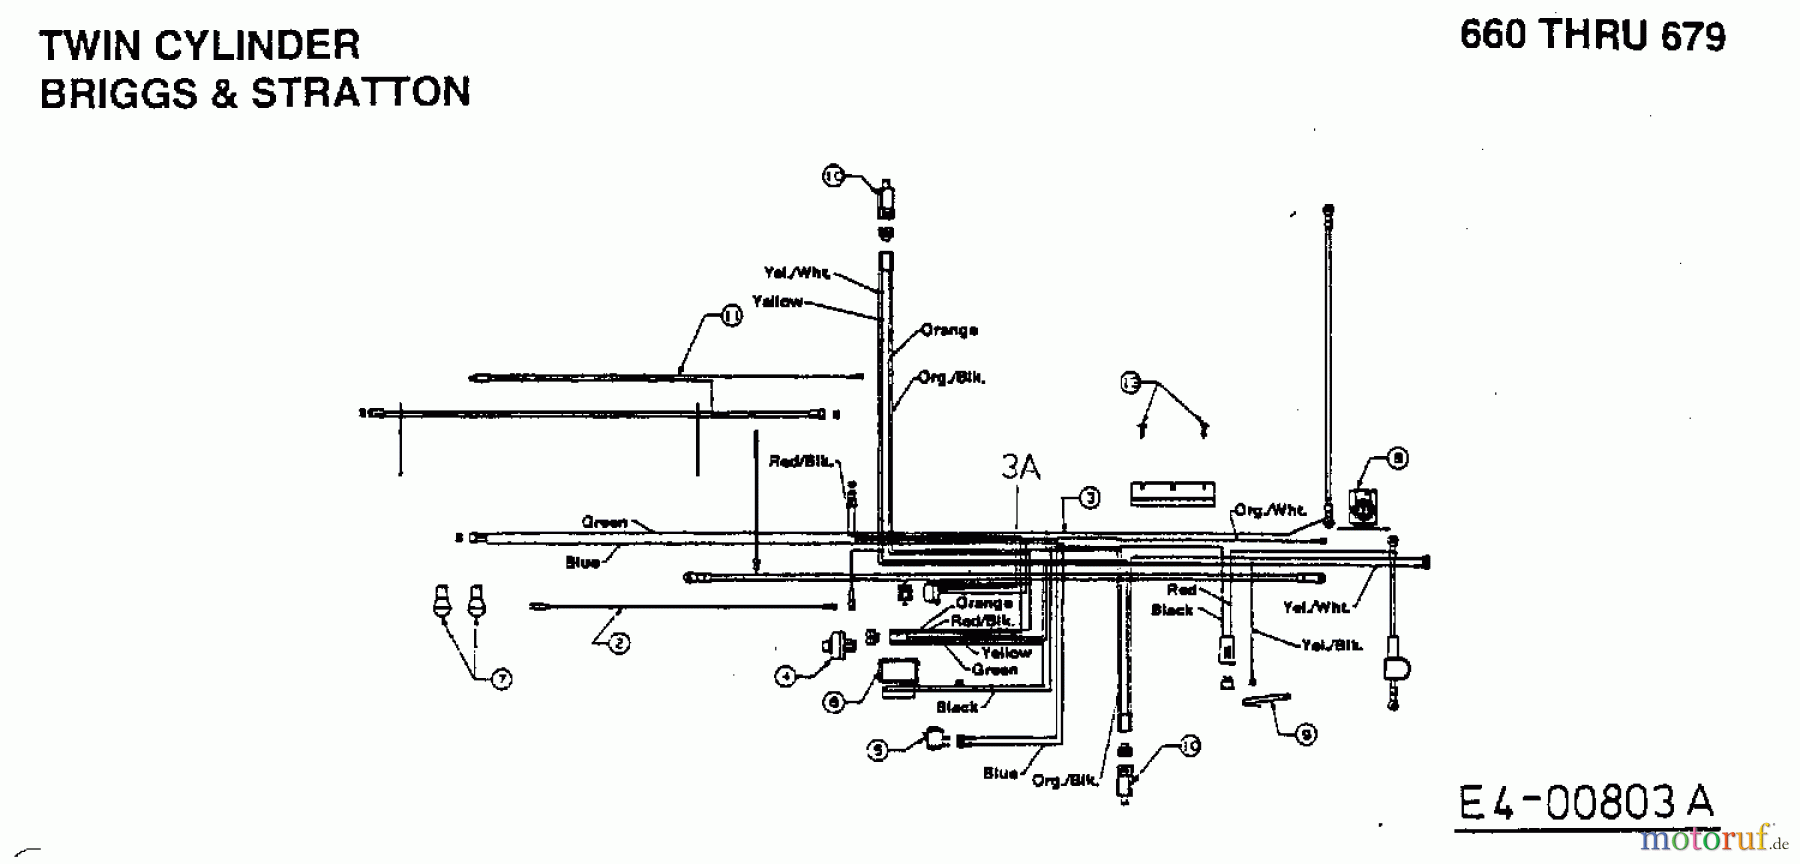  MTD Lawn tractors B/180 13AQ675G661  (1999) Wiring diagram twin cylinder